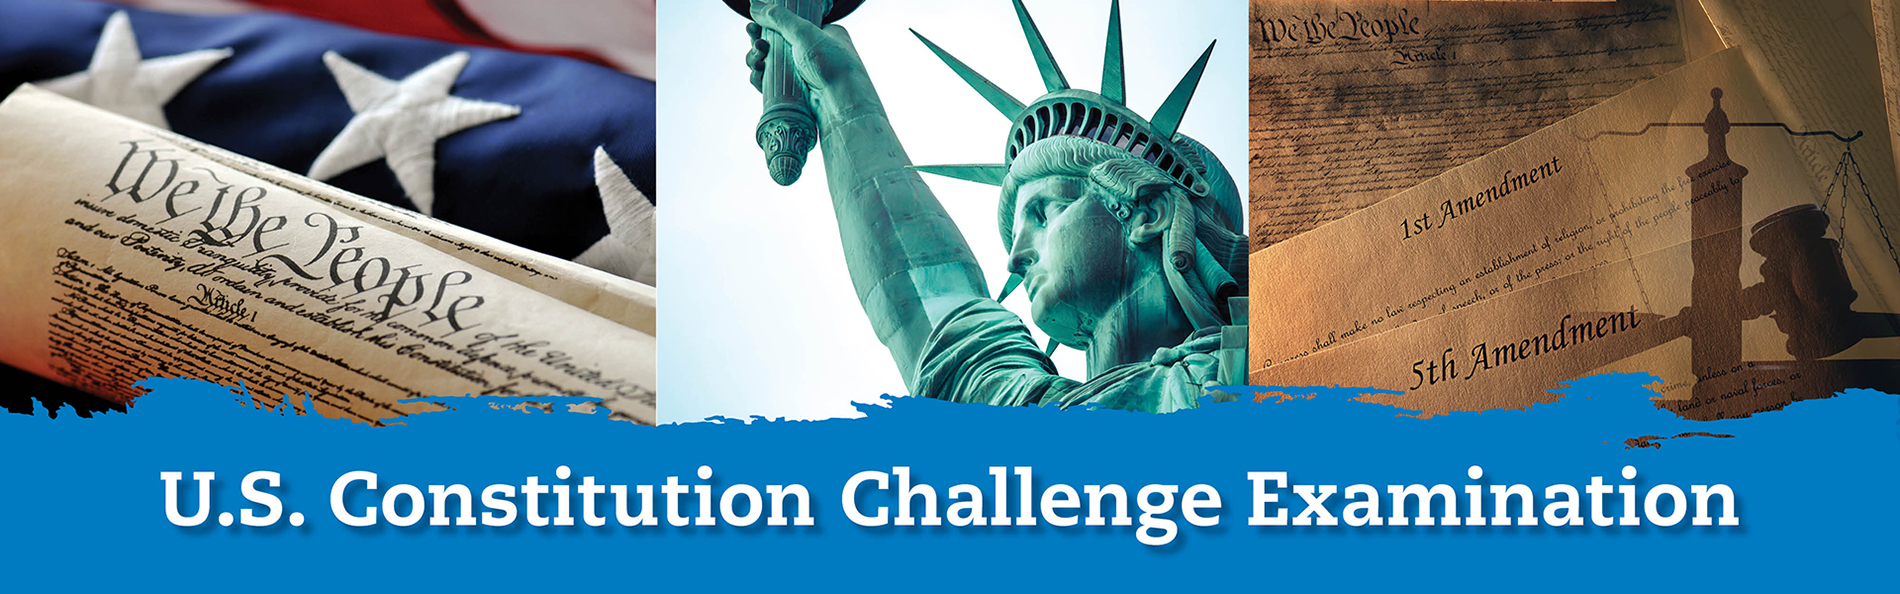 U.S. Constitution Challenge Examination 